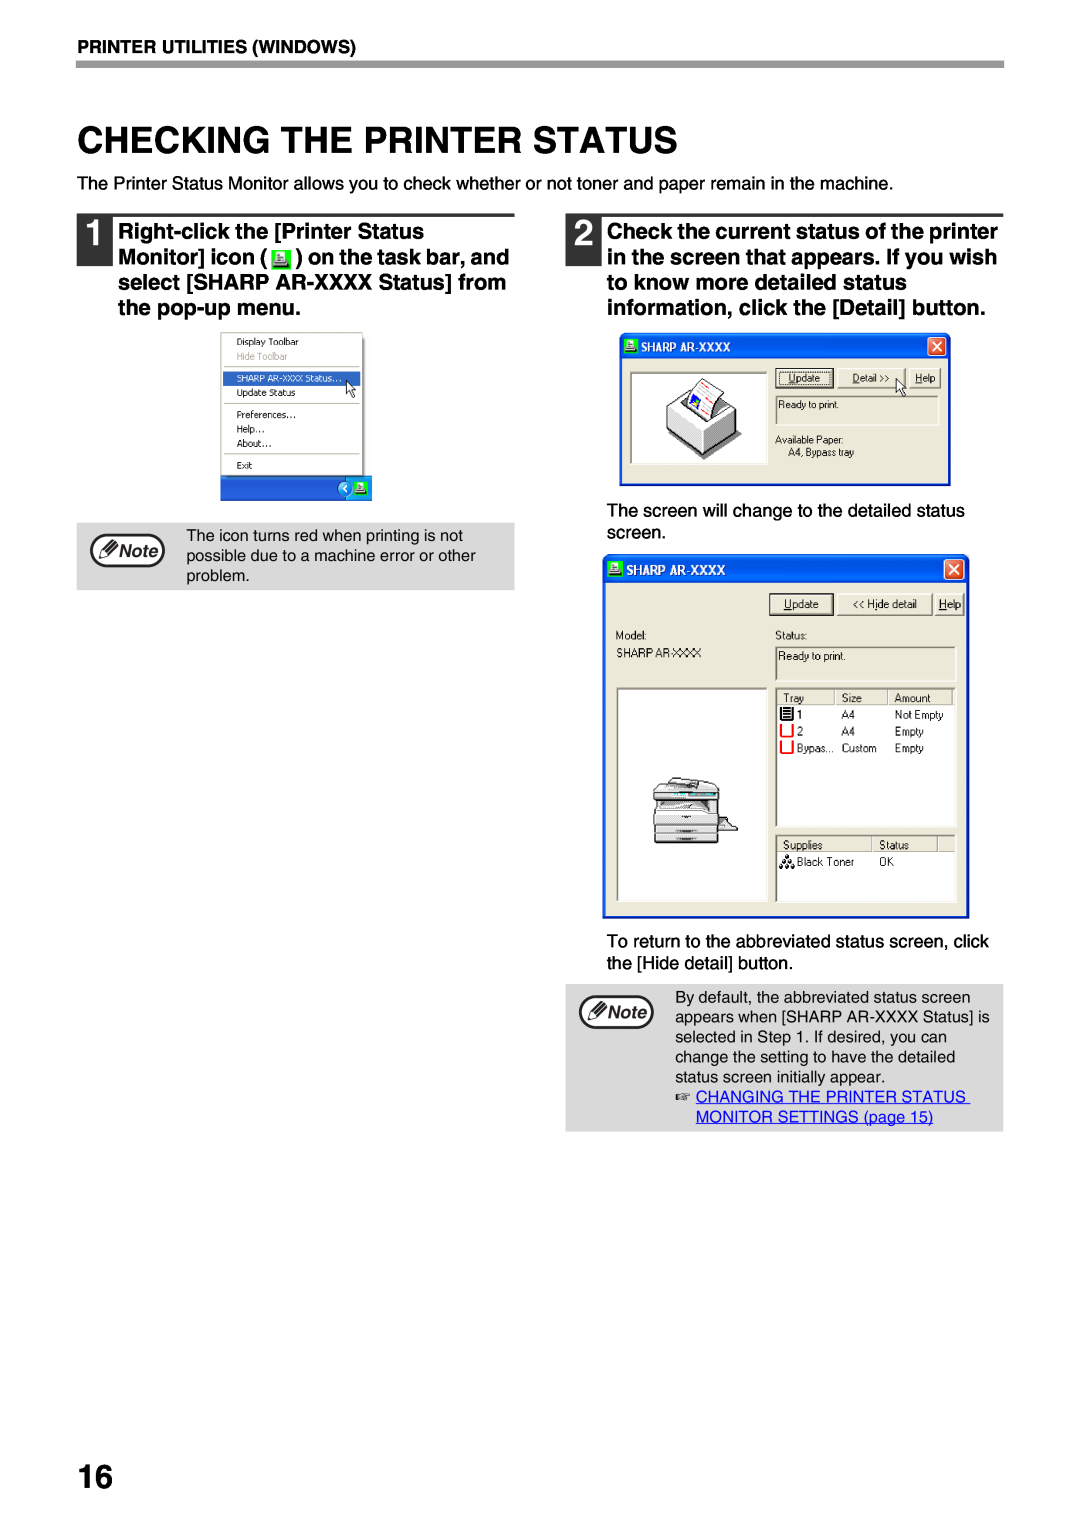 Sharp AR-NB3 operation manual Checking The Printer Status, Printer Utilities Windows 